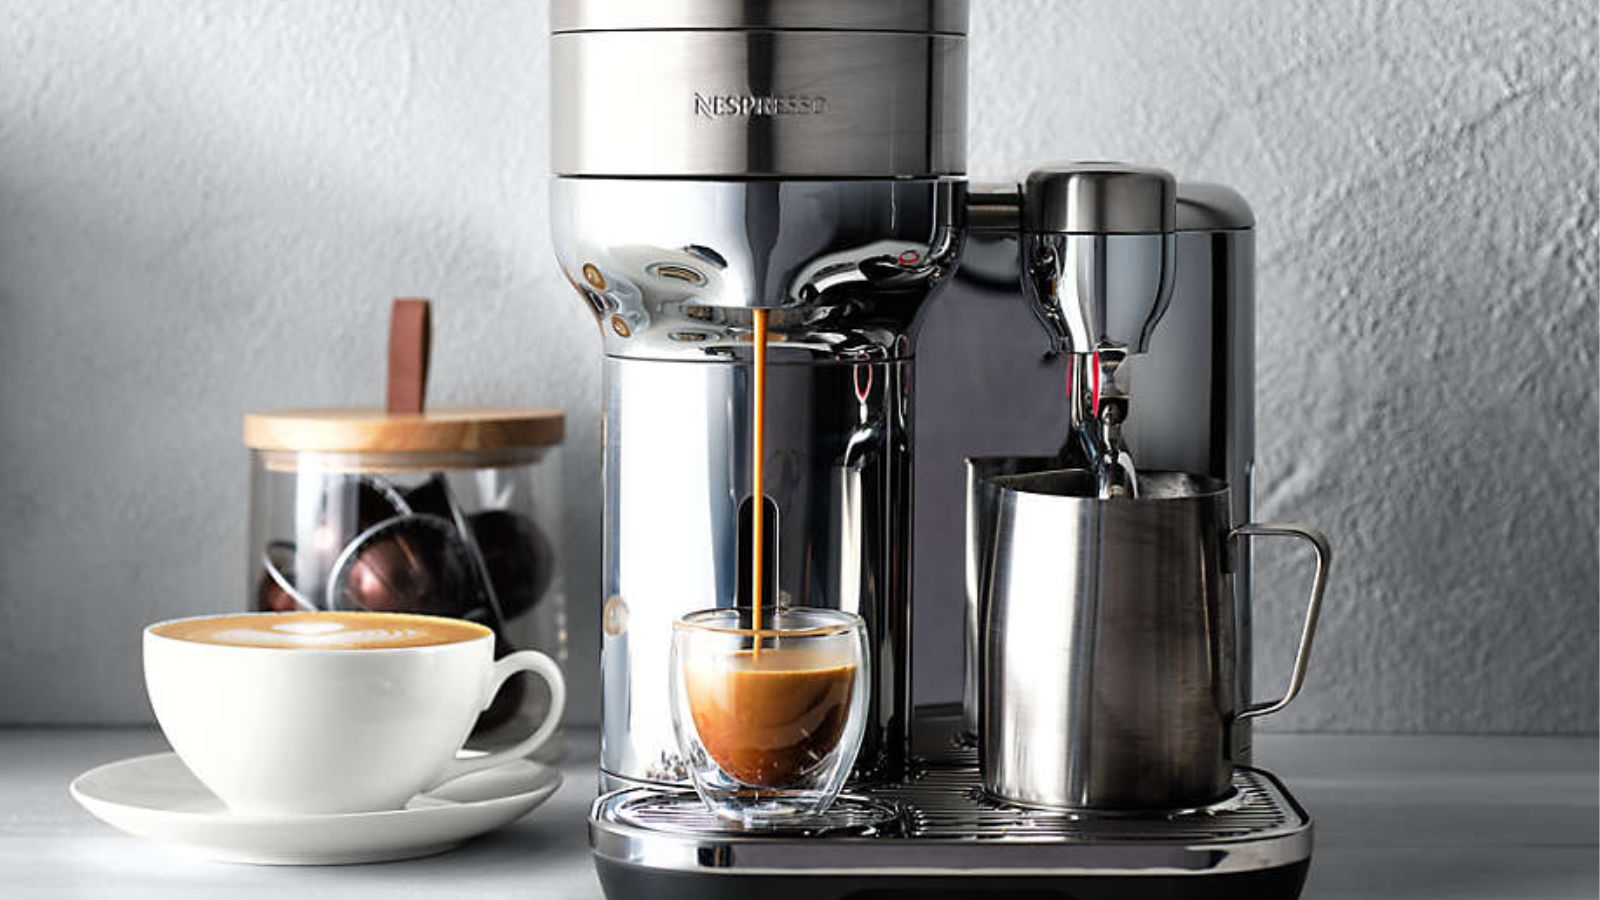 Nespresso Vertuo Creatista Review: The Low-Maintenance Winner for